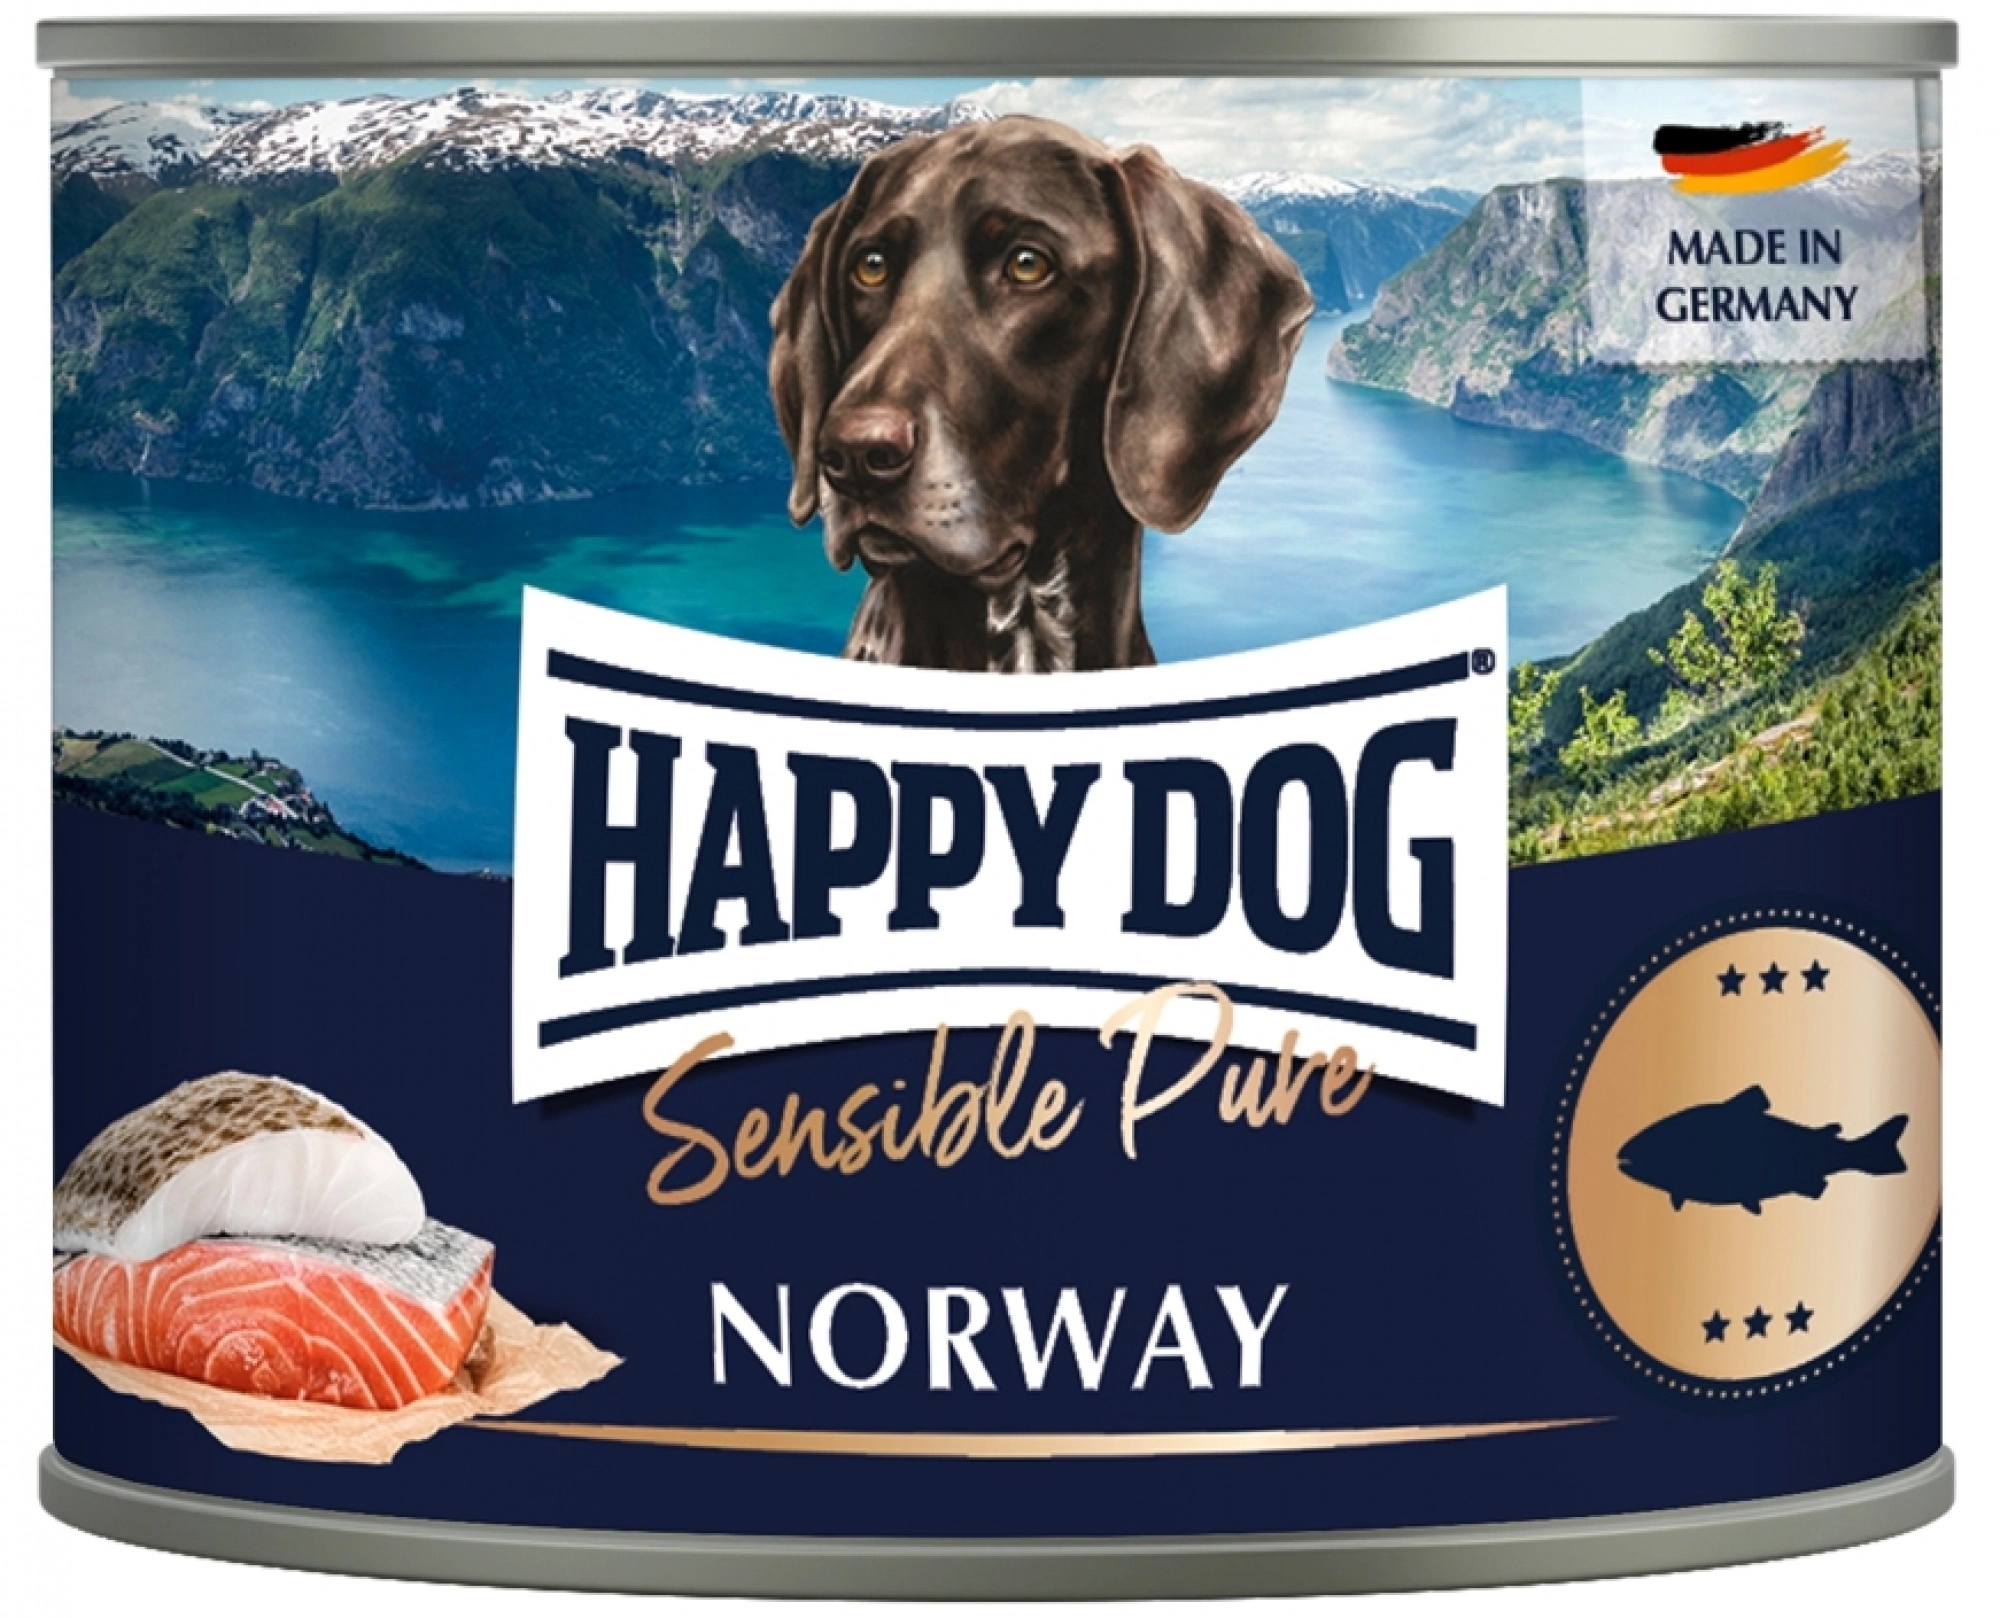 Happy Dog Supreme Sensible PUR KONZERV NORWAY (tengeri hal) 6X200 G